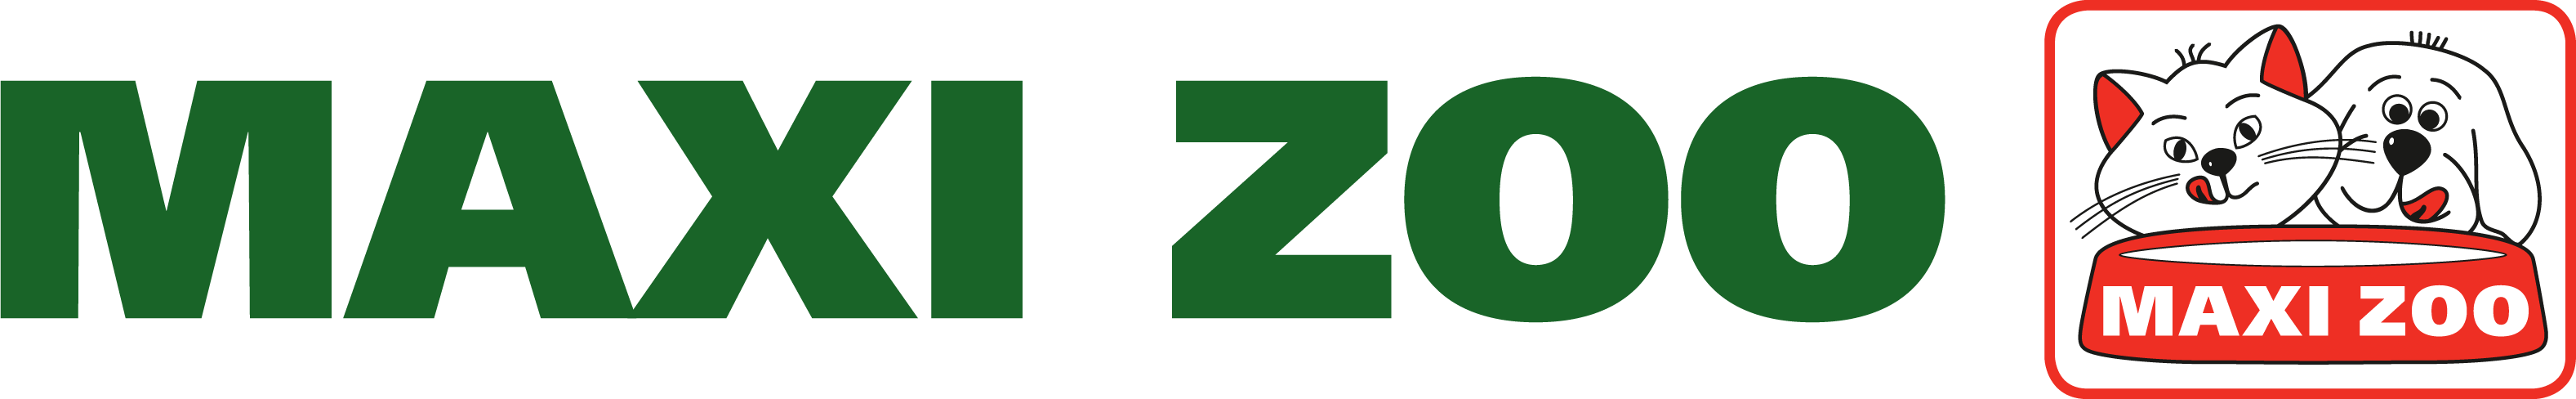 10 – Maxi Zoo